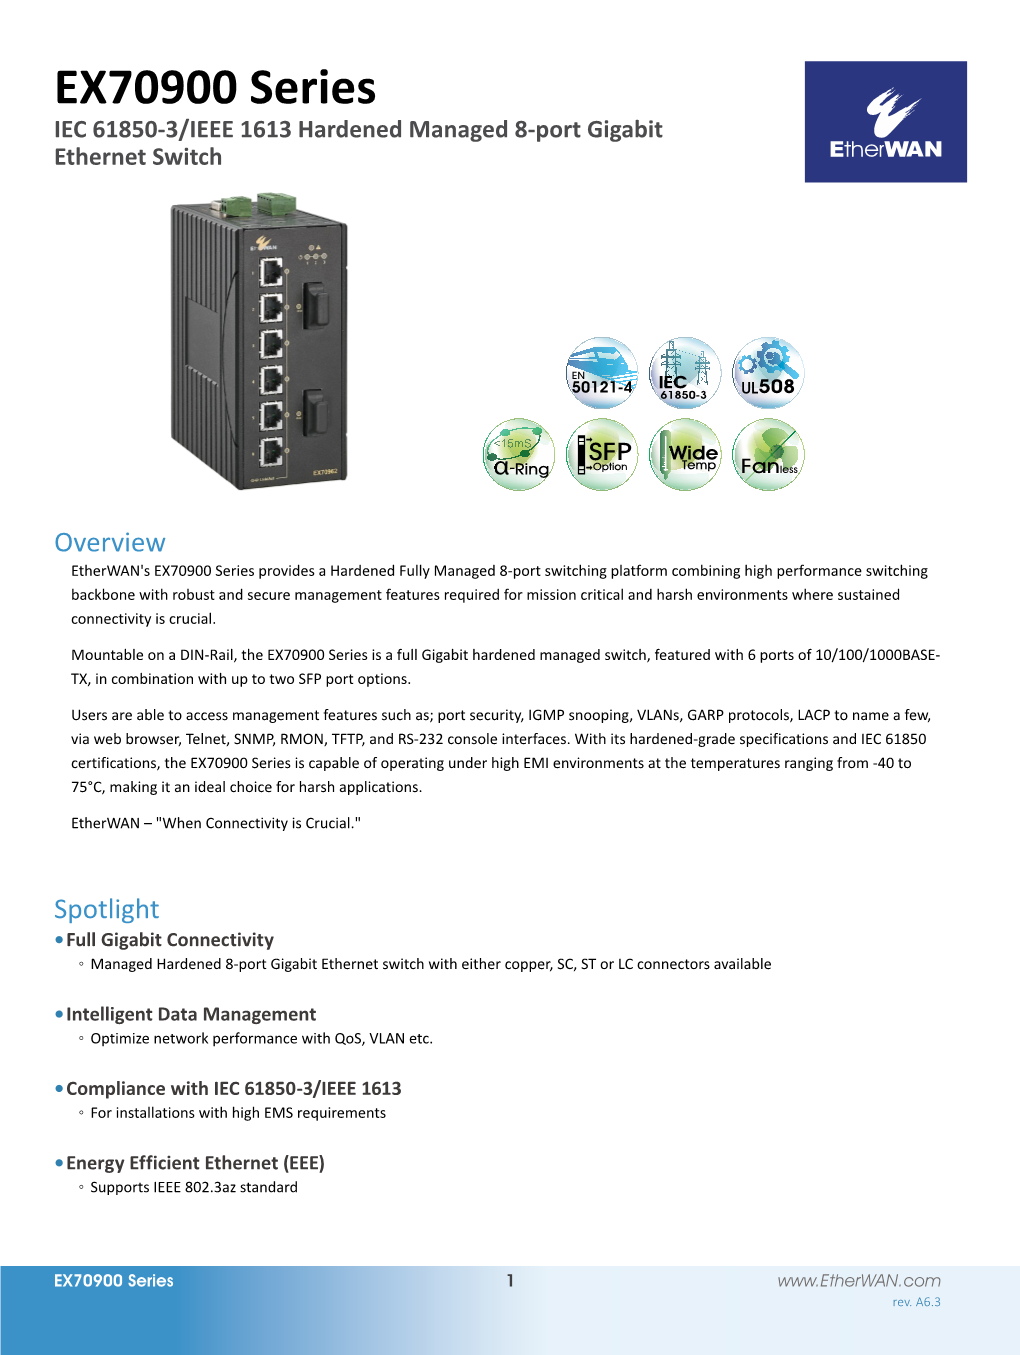 EX70900 Series IEC 61850-3/IEEE 1613 Hardened Managed 8-Port Gigabit Ethernet Switch